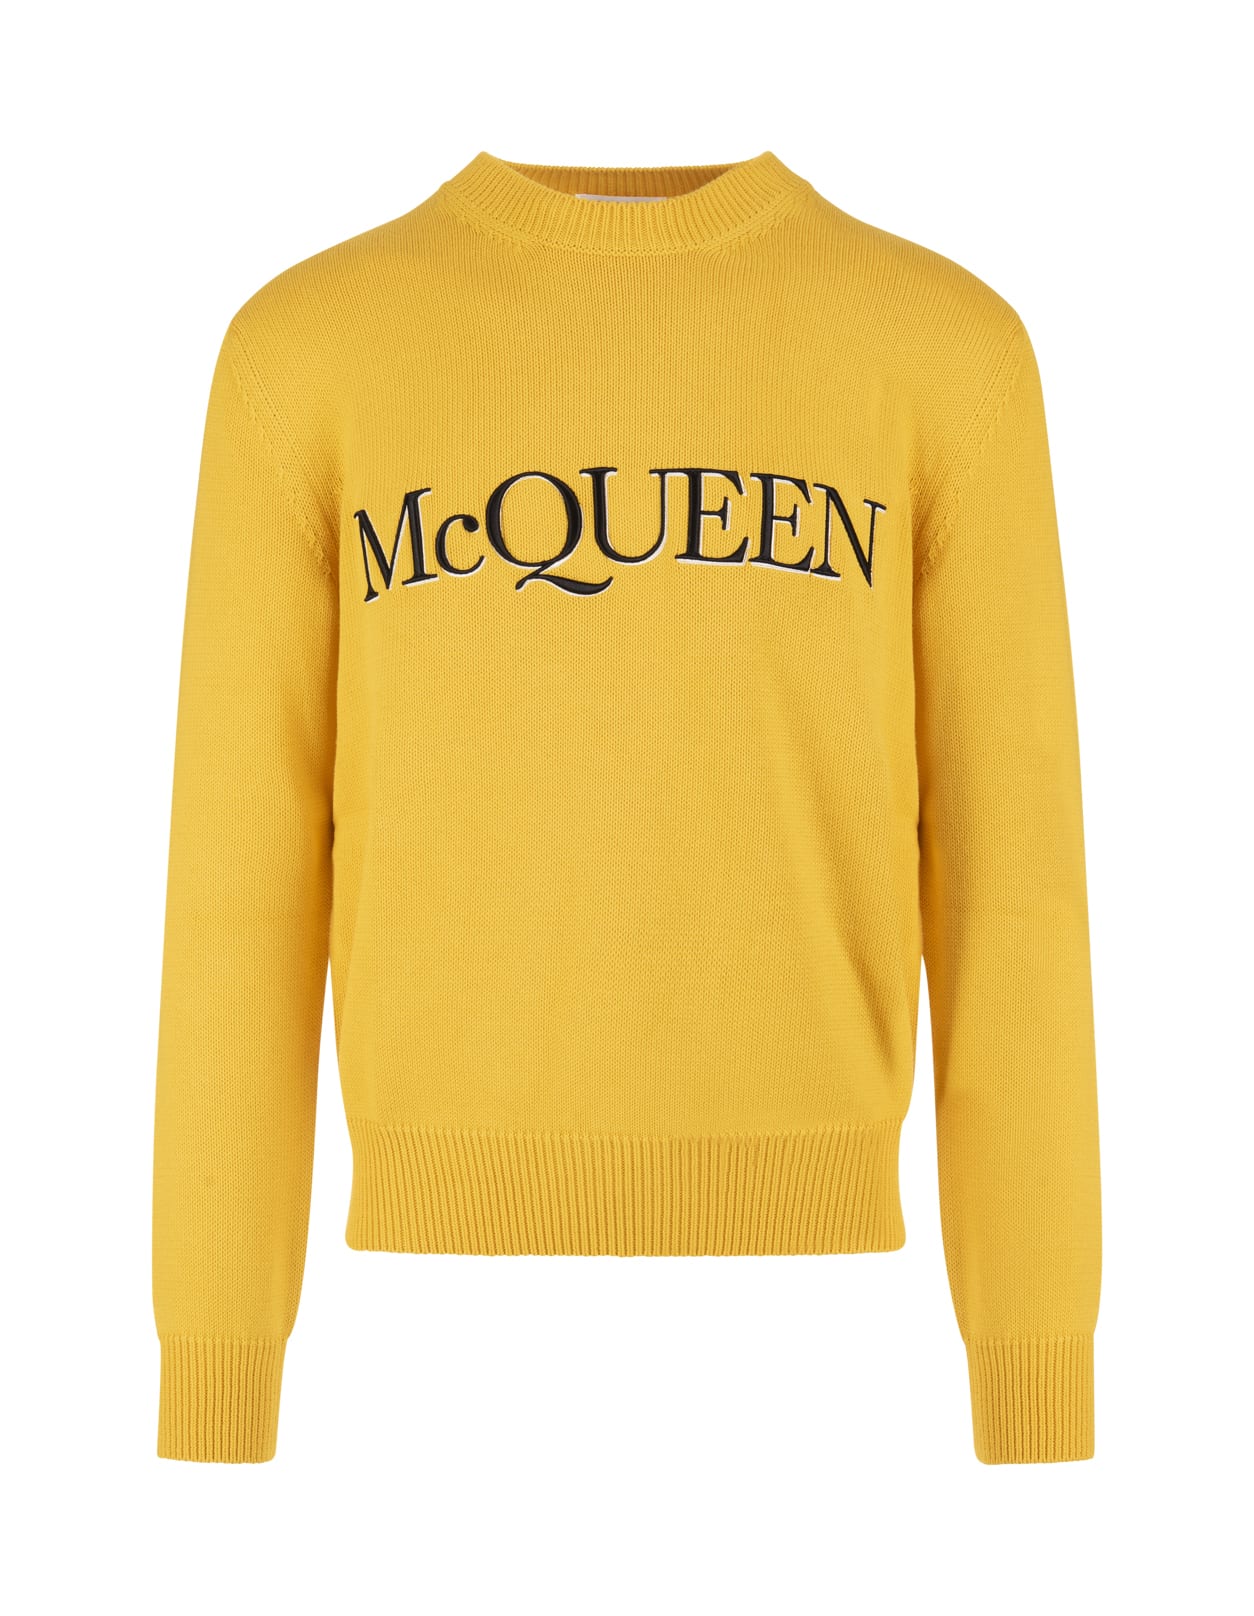 Alexander McQueen Man Pop Yellow Crew Neck Sweater With Mcqueen Embroidery